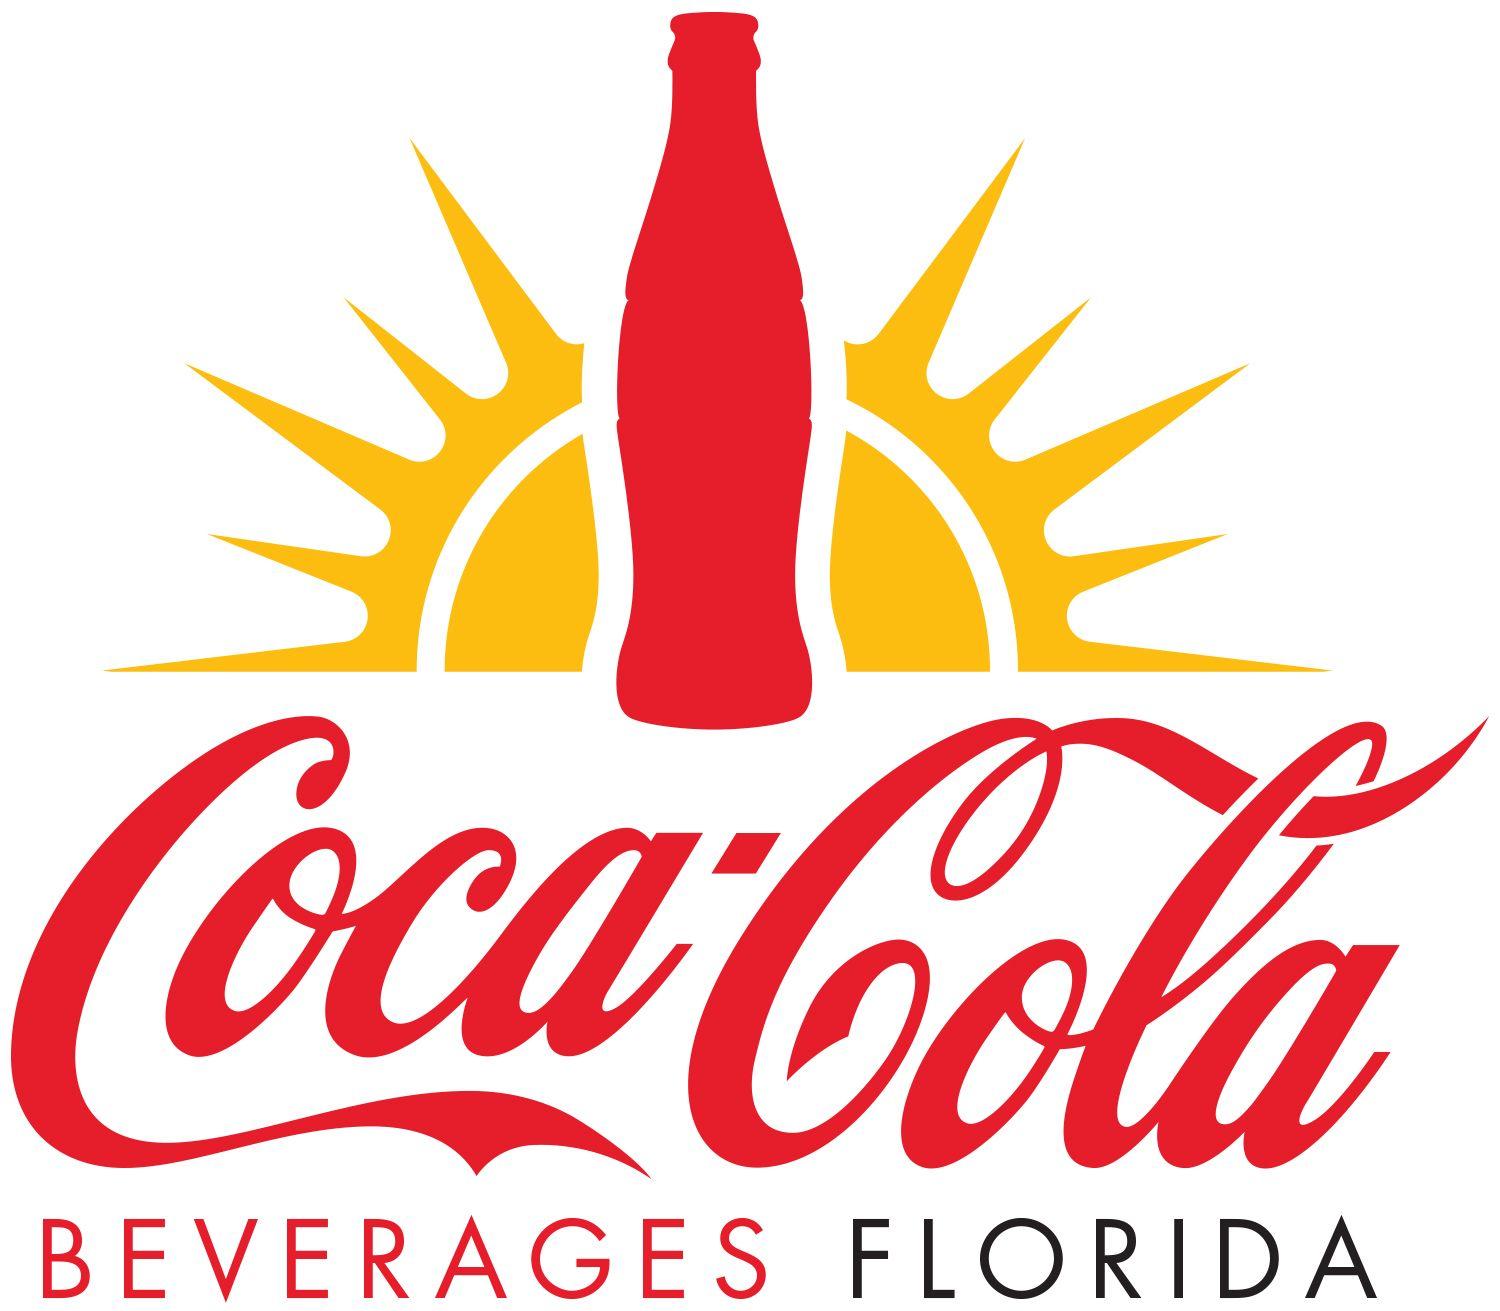 Florida Logo - All Florida Academic Team. The Florida College System